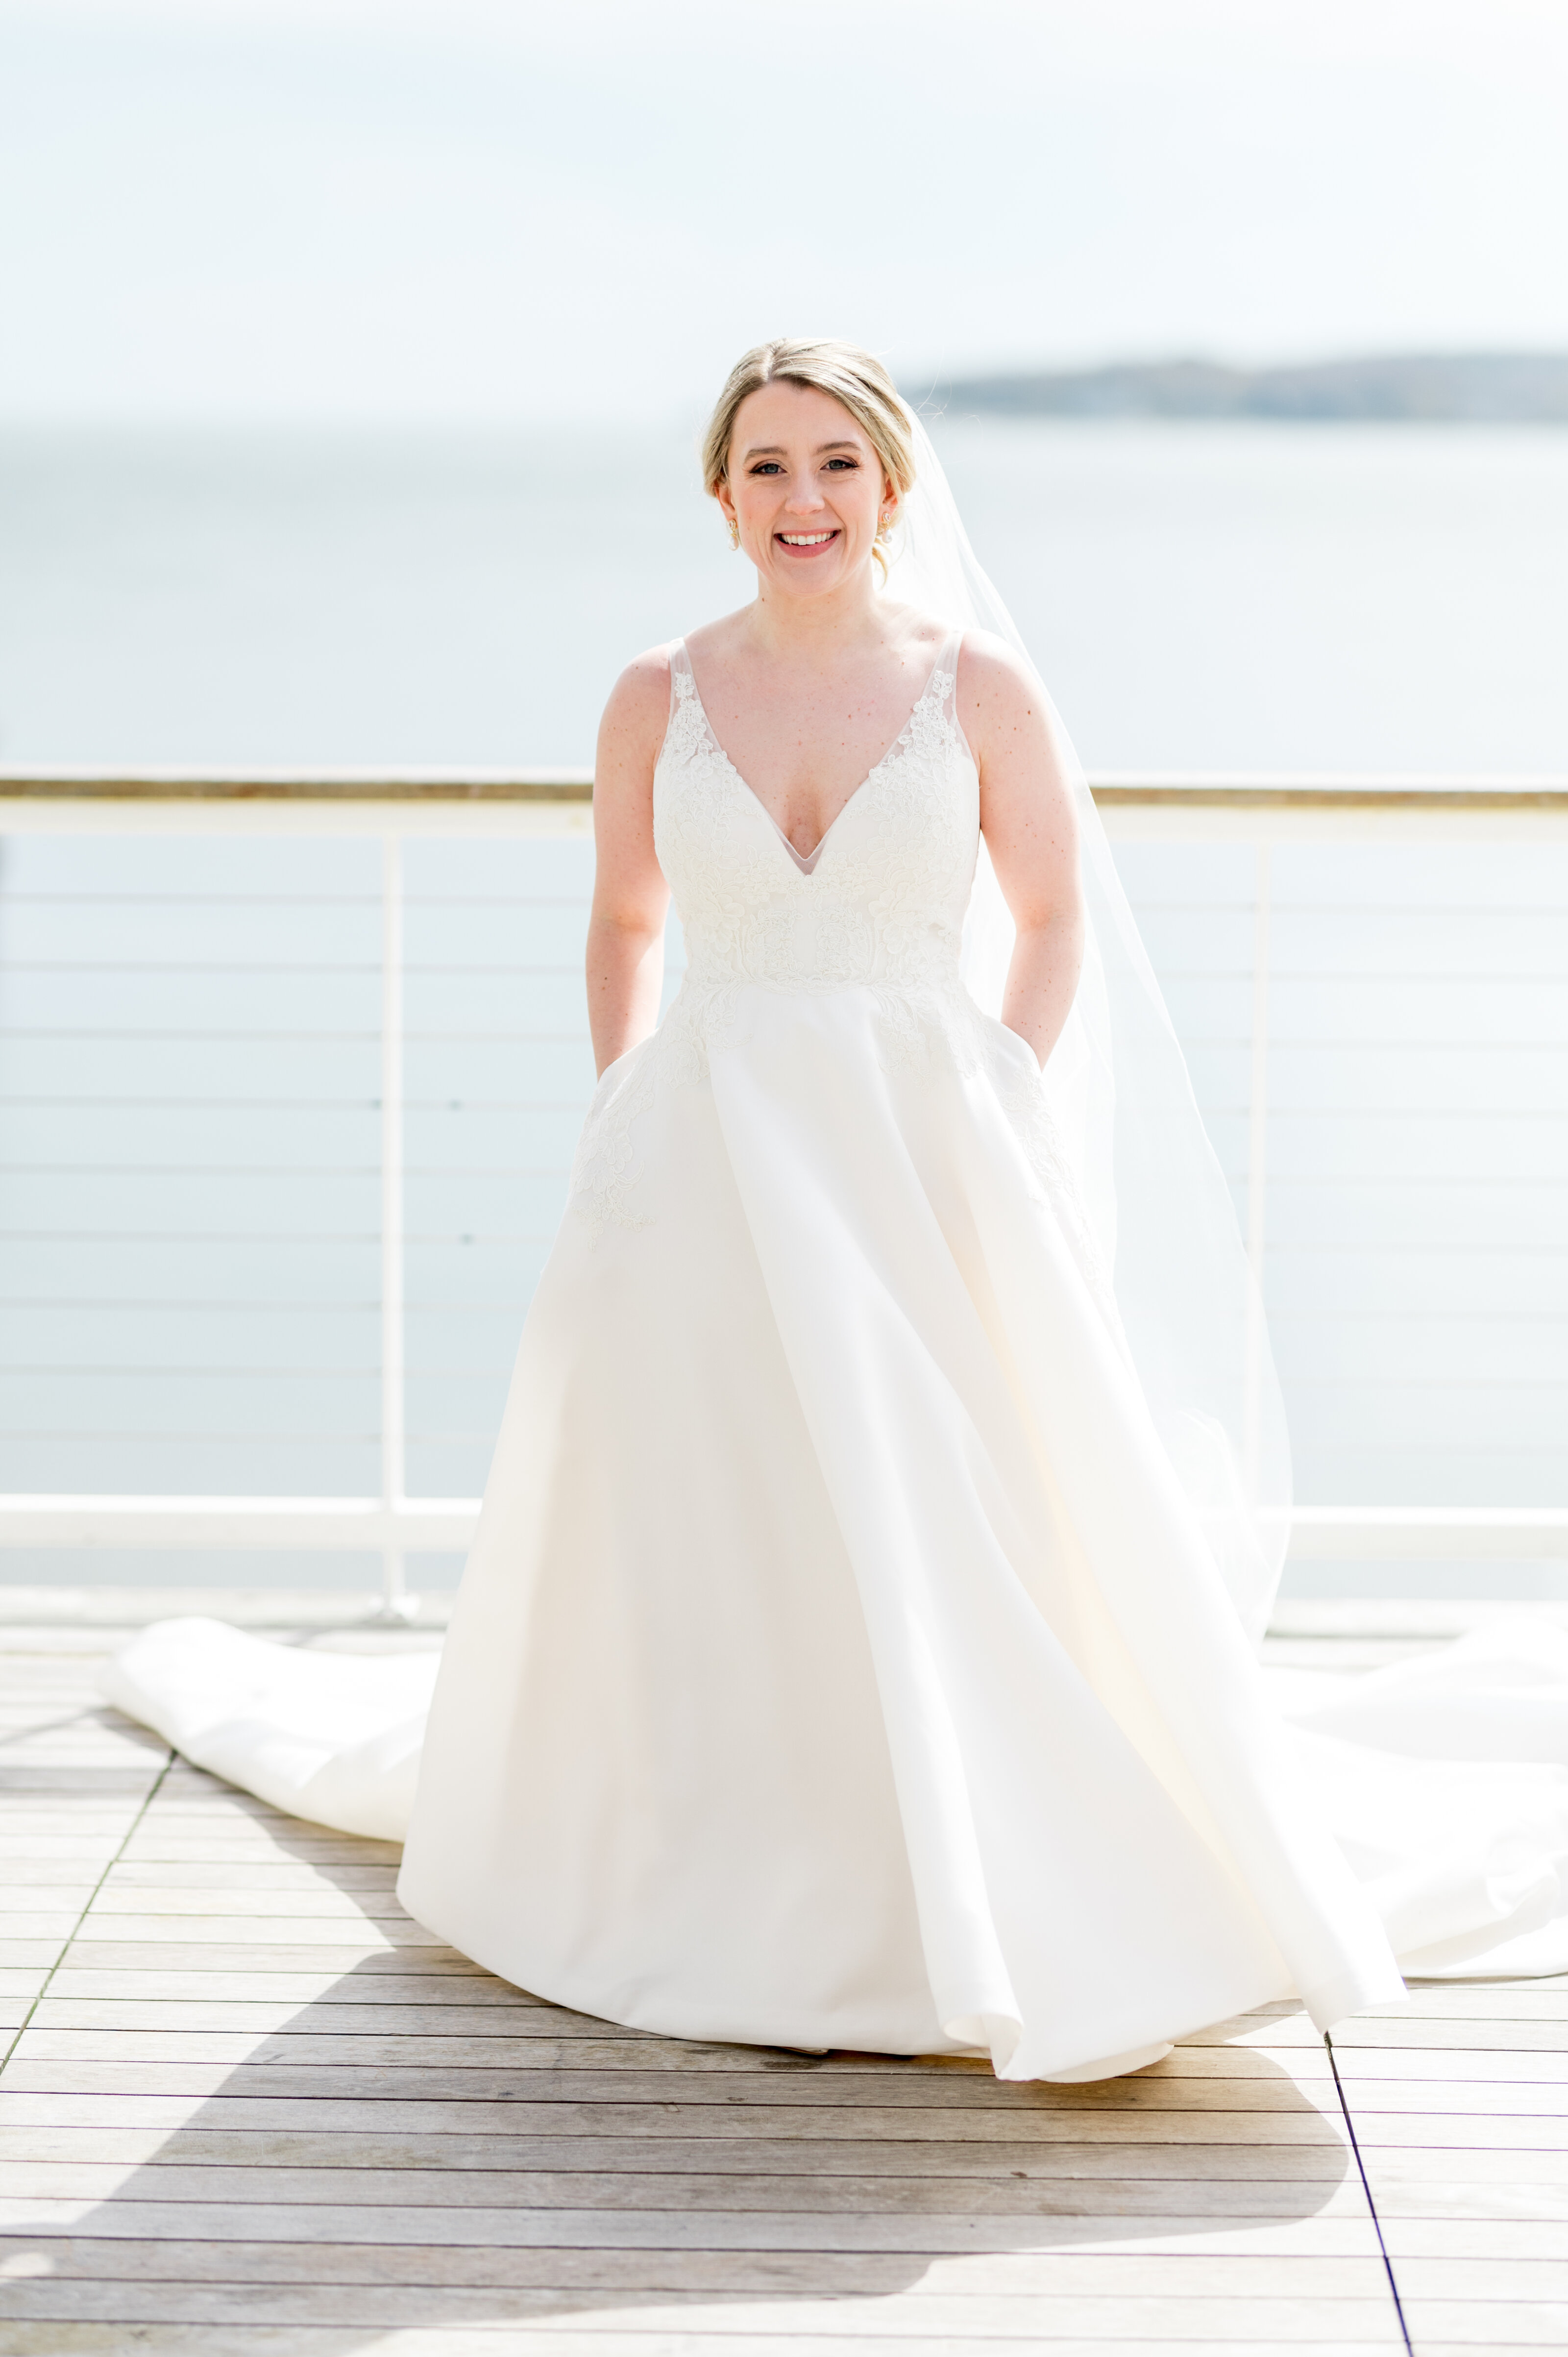 Coastal Massachusetts Bride